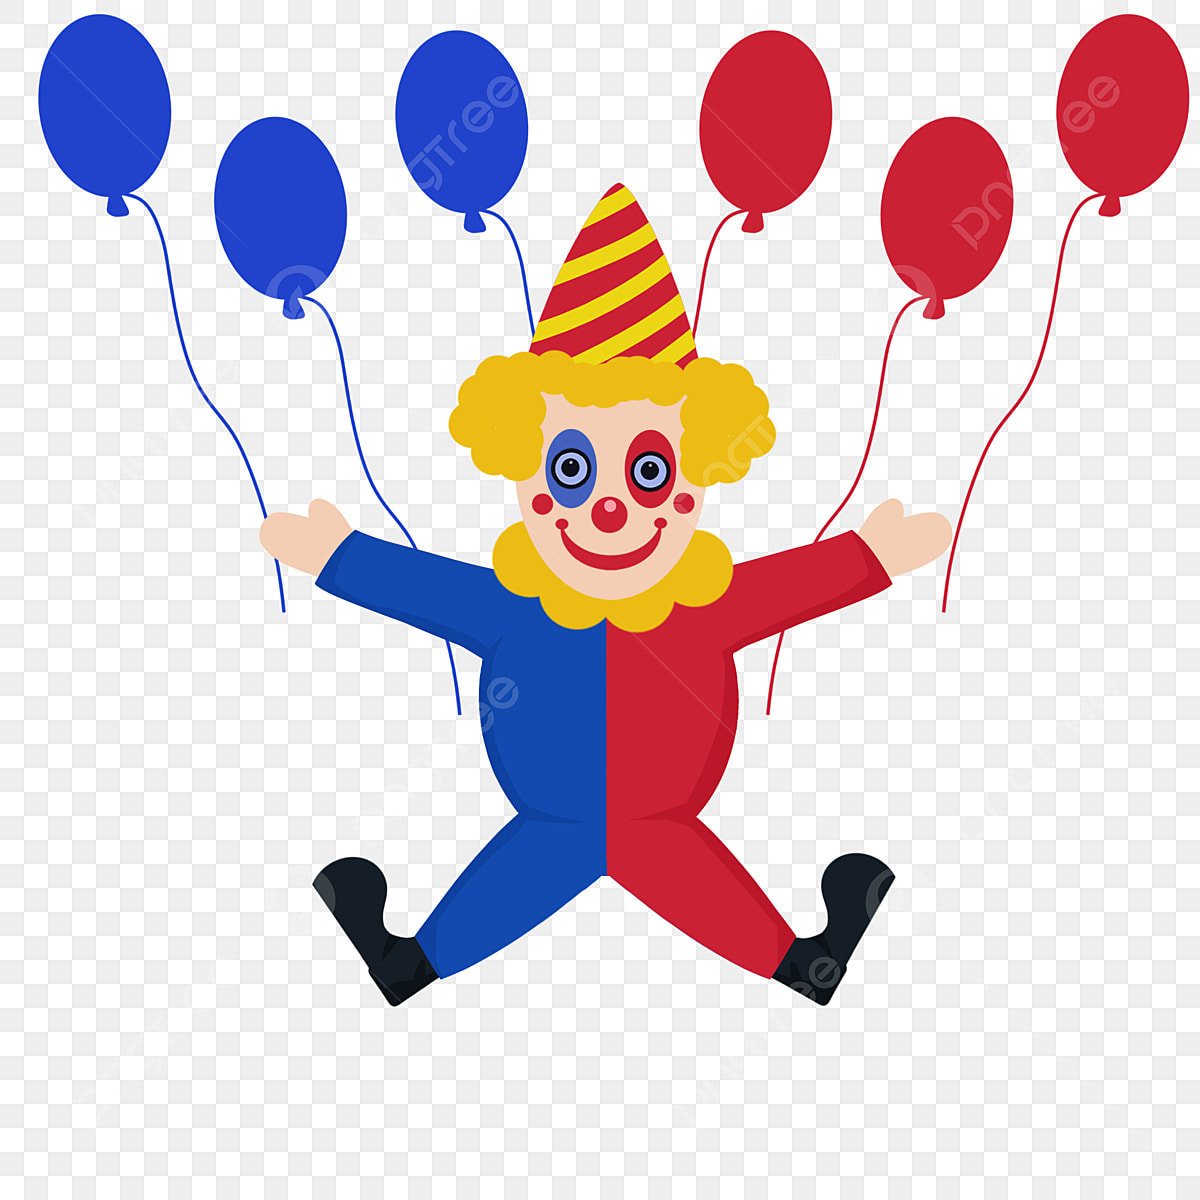 Клоун с шарами. Клоун с шариками. Клоун с шариками для детей. Клоун на белом фоне для детей. Клоун с воздушными шариками.